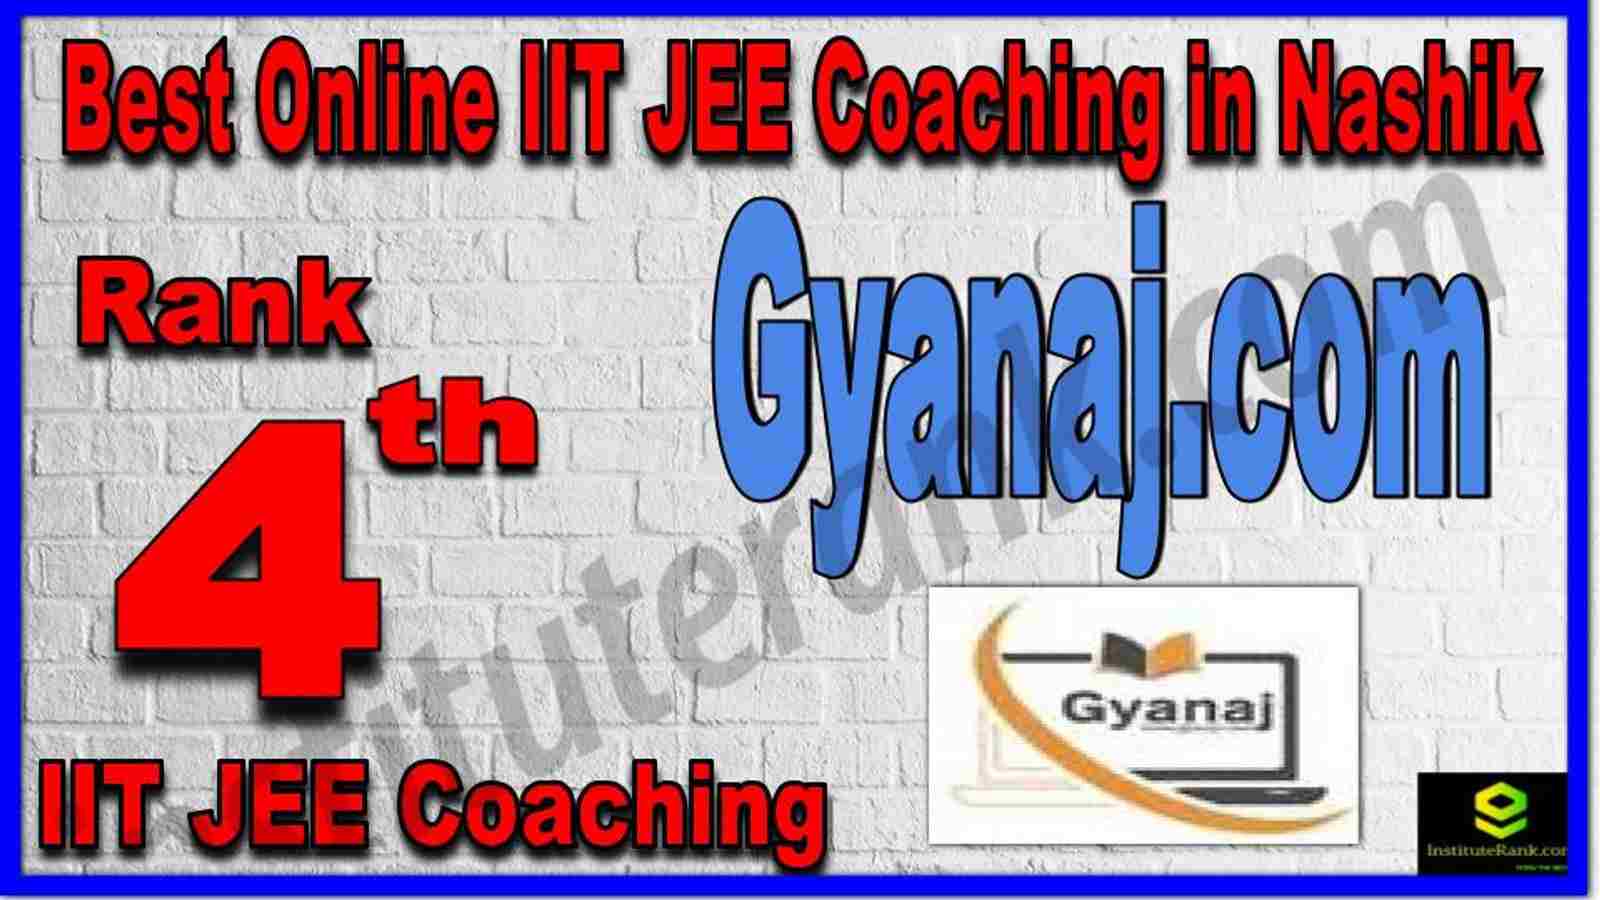 Rank 4th Best Online IIT JEE Coaching in Nashik